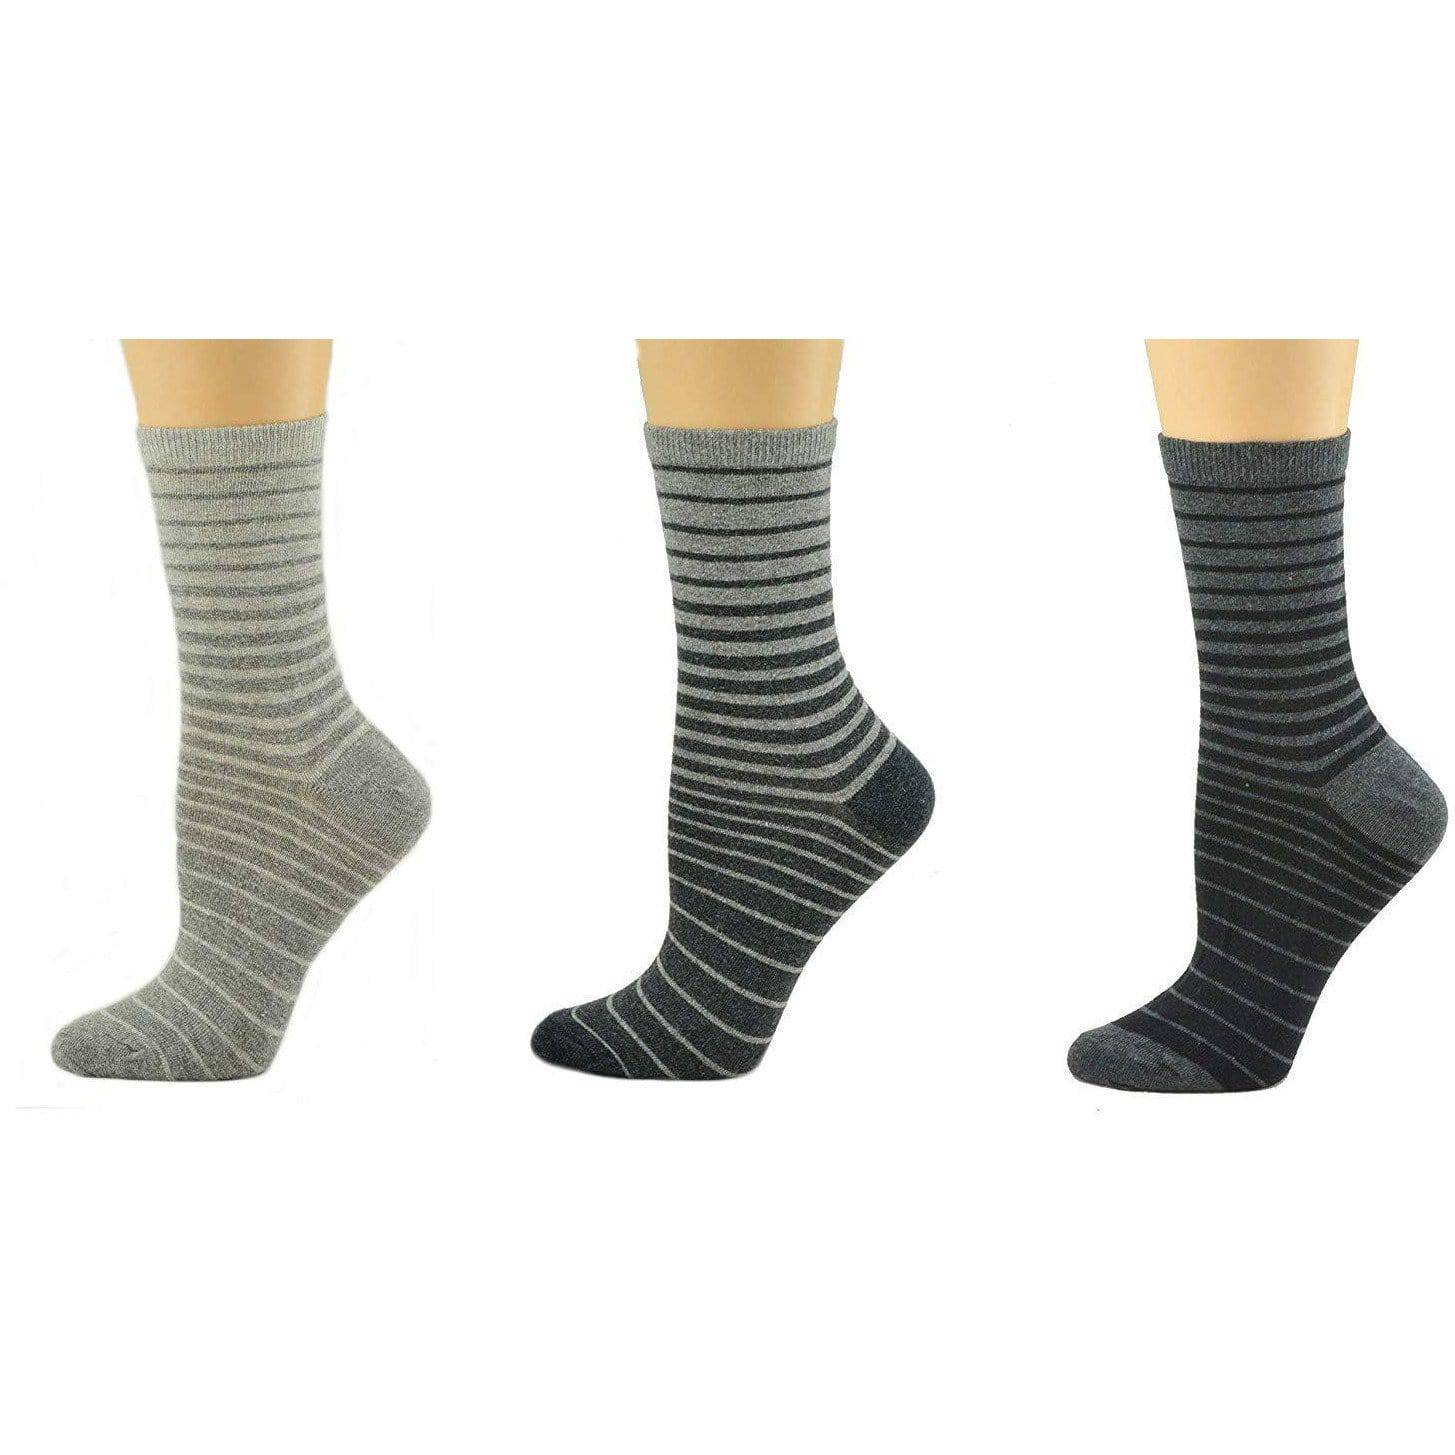 Sierra Socks Women's Striped Cotton 1 Pair or 3 Pair Pack Socks W89